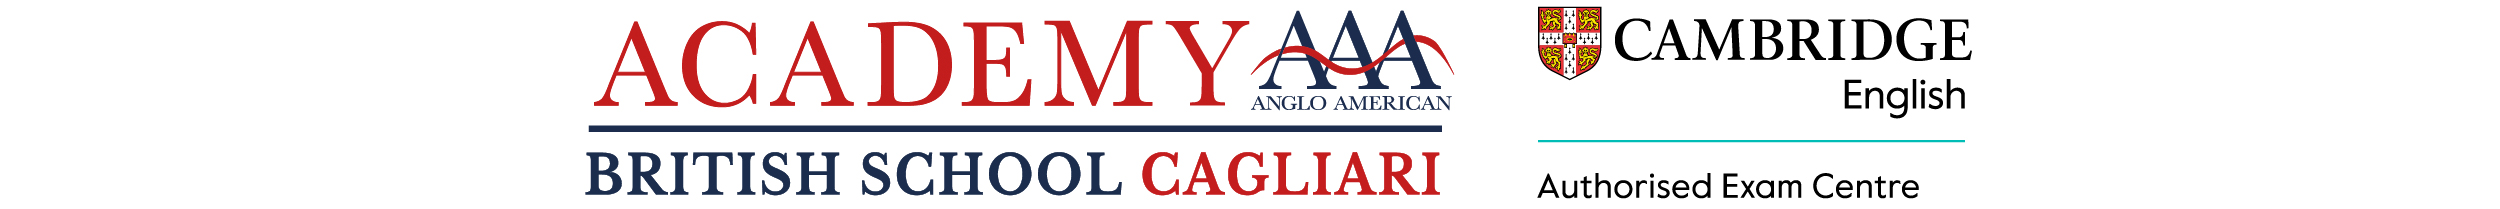 Anglo American Academy